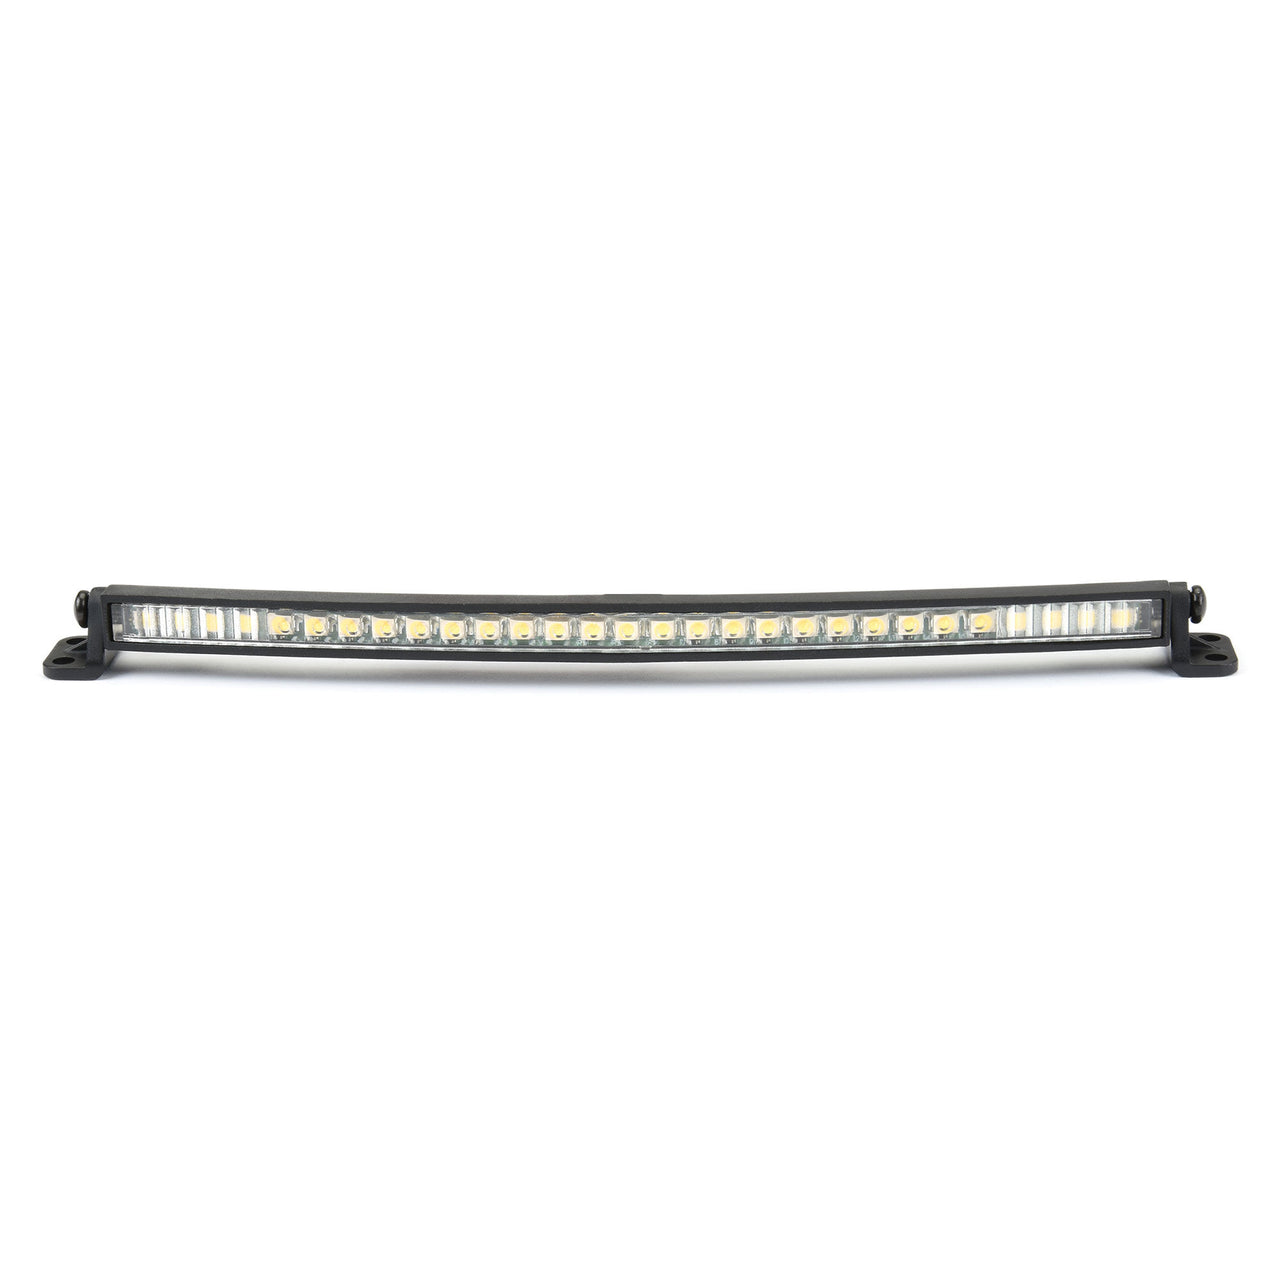 PRO635203 6" Ultra-Slim LED Light Bar Kit 5V-12V (Curved)